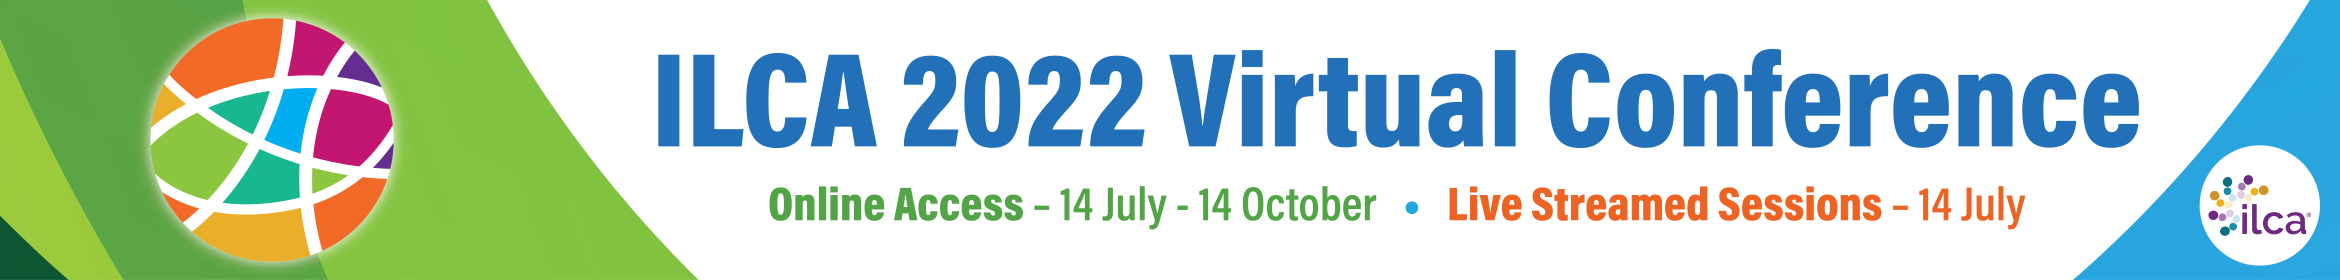 ILCA 2022  Virtual Conference Main banner